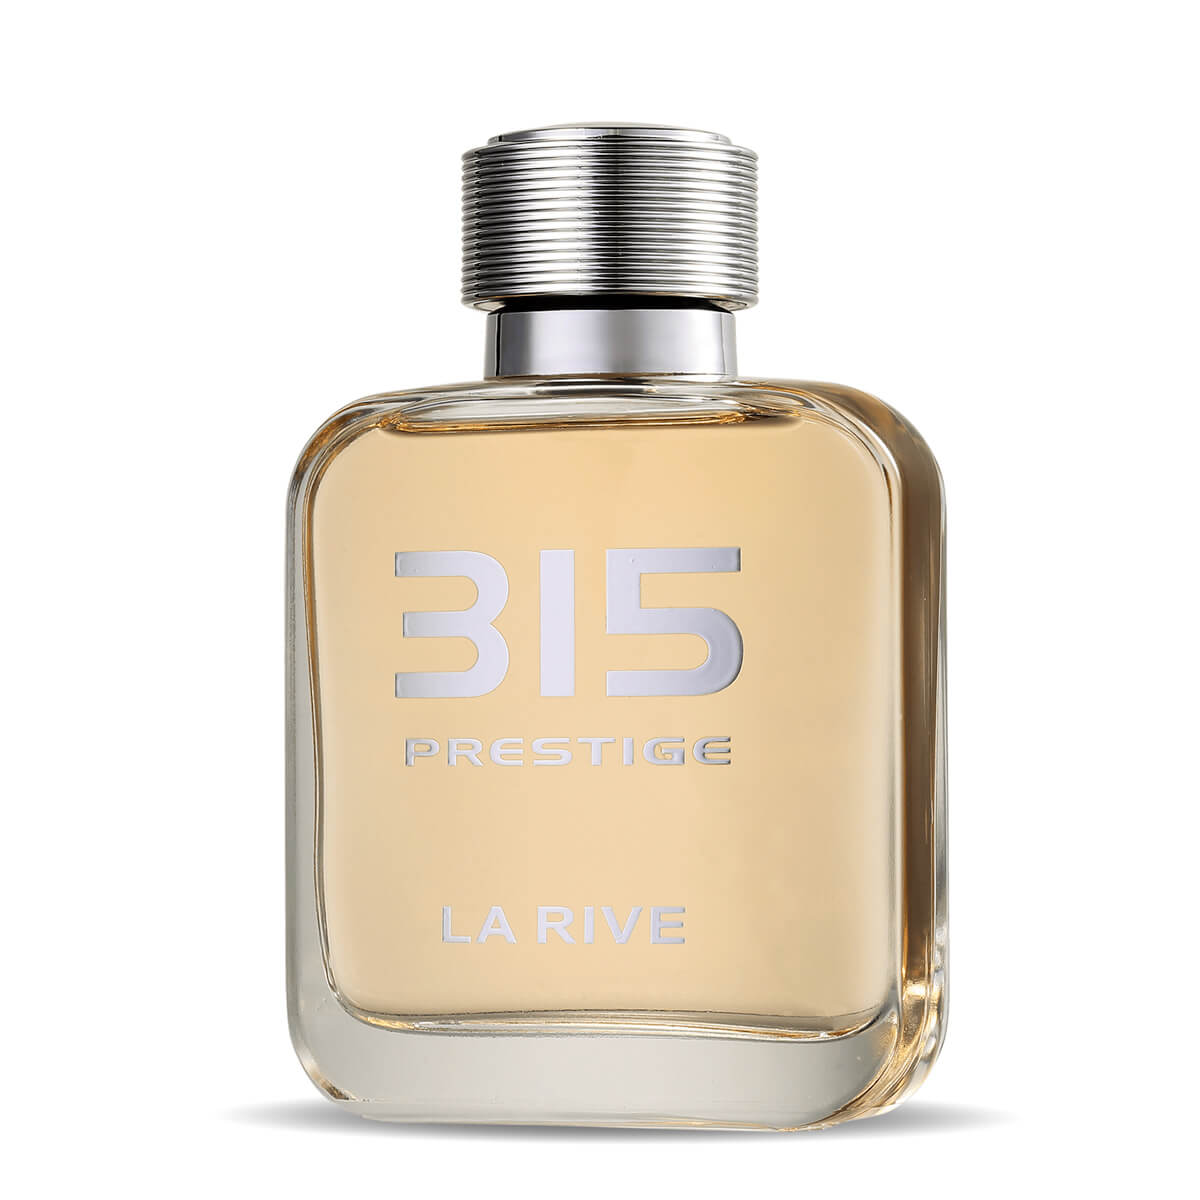 Perfume Prestige 315 Masculino Edt 100ml La Rive  - Mercari Perfumes